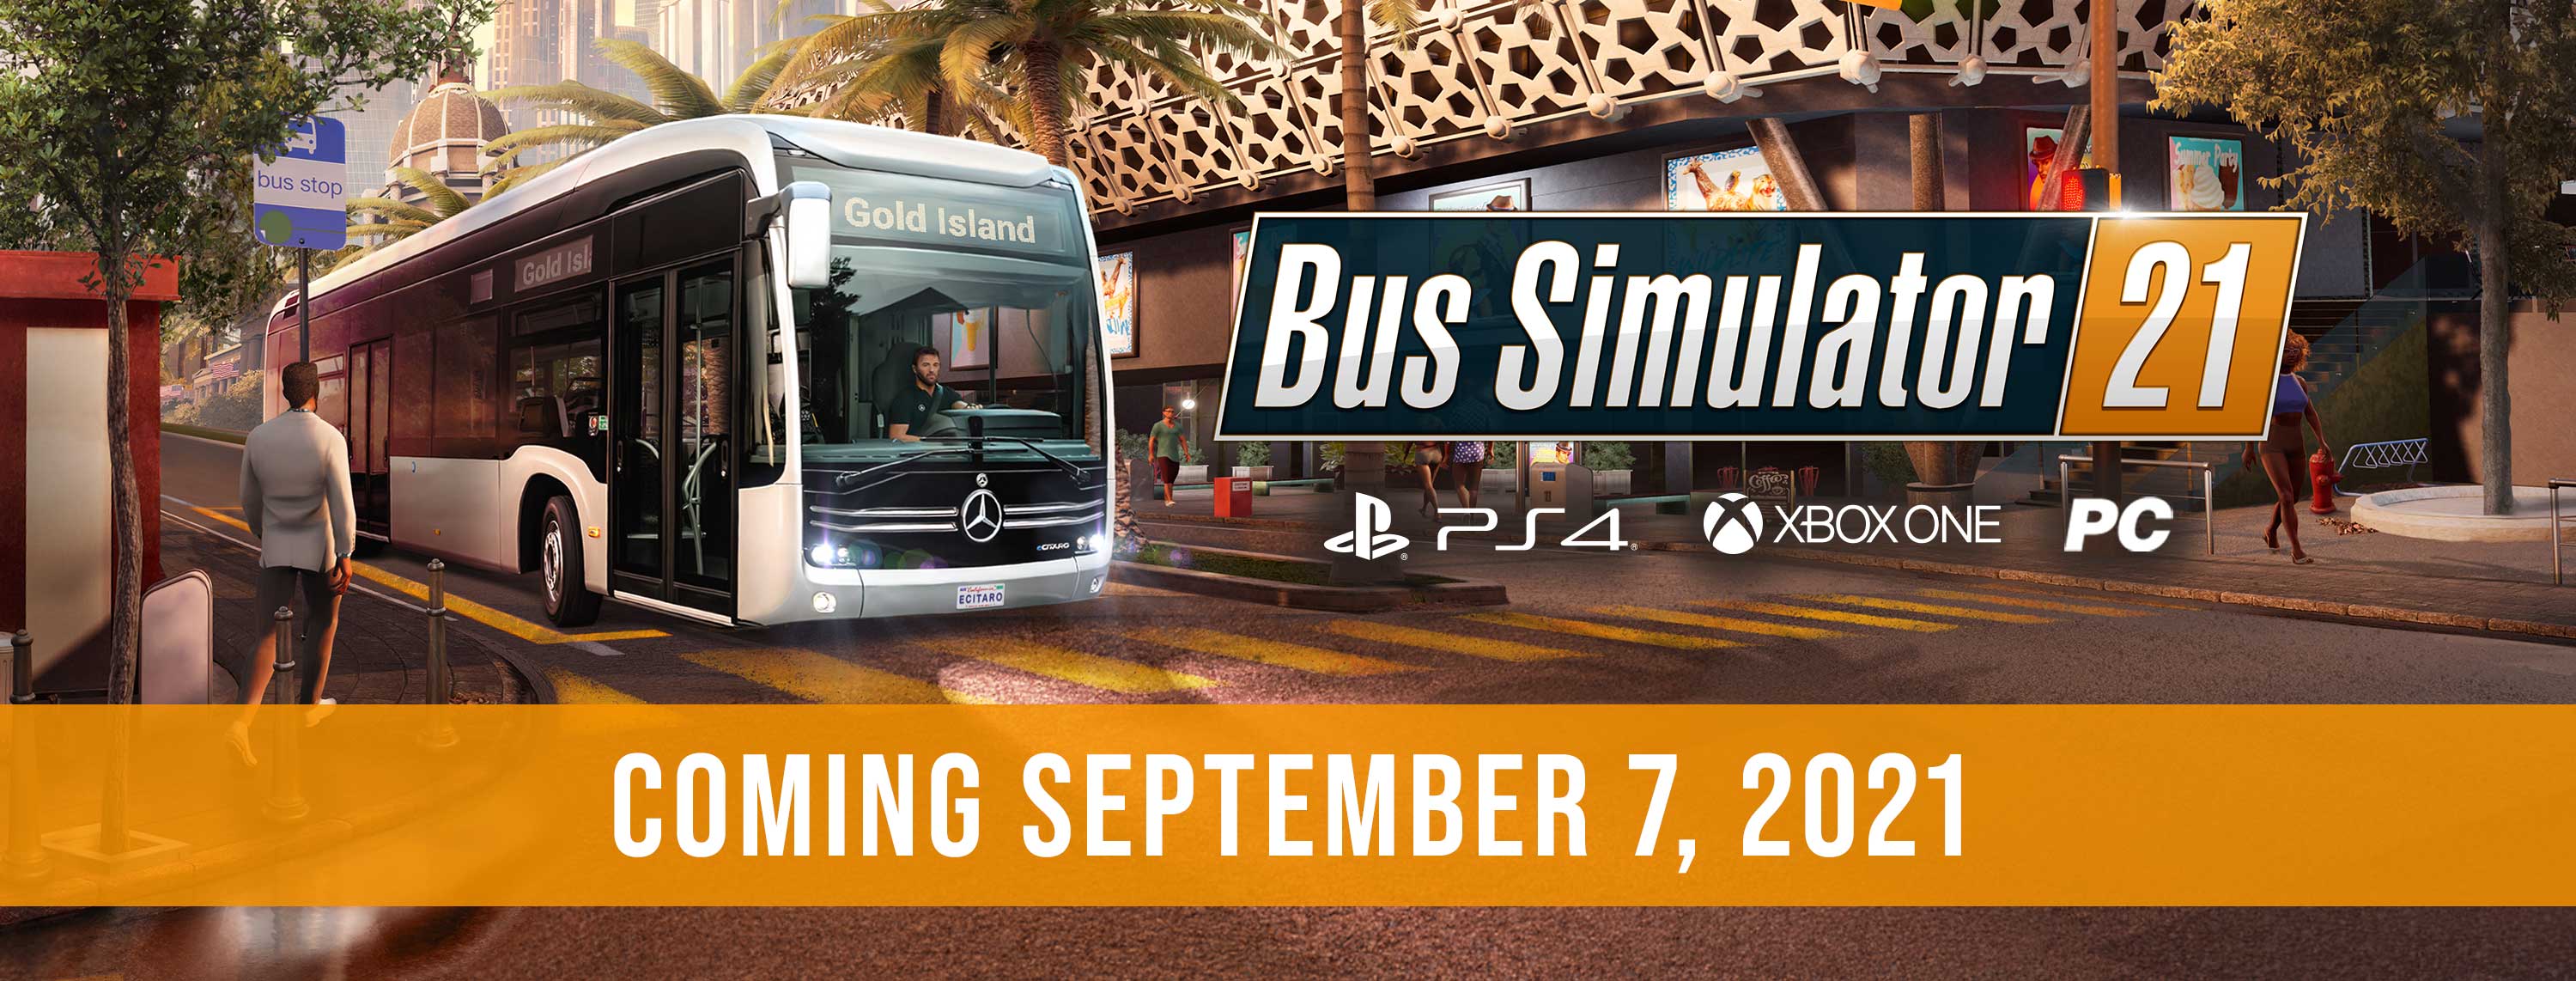 Bus Simulator 21 Release Date